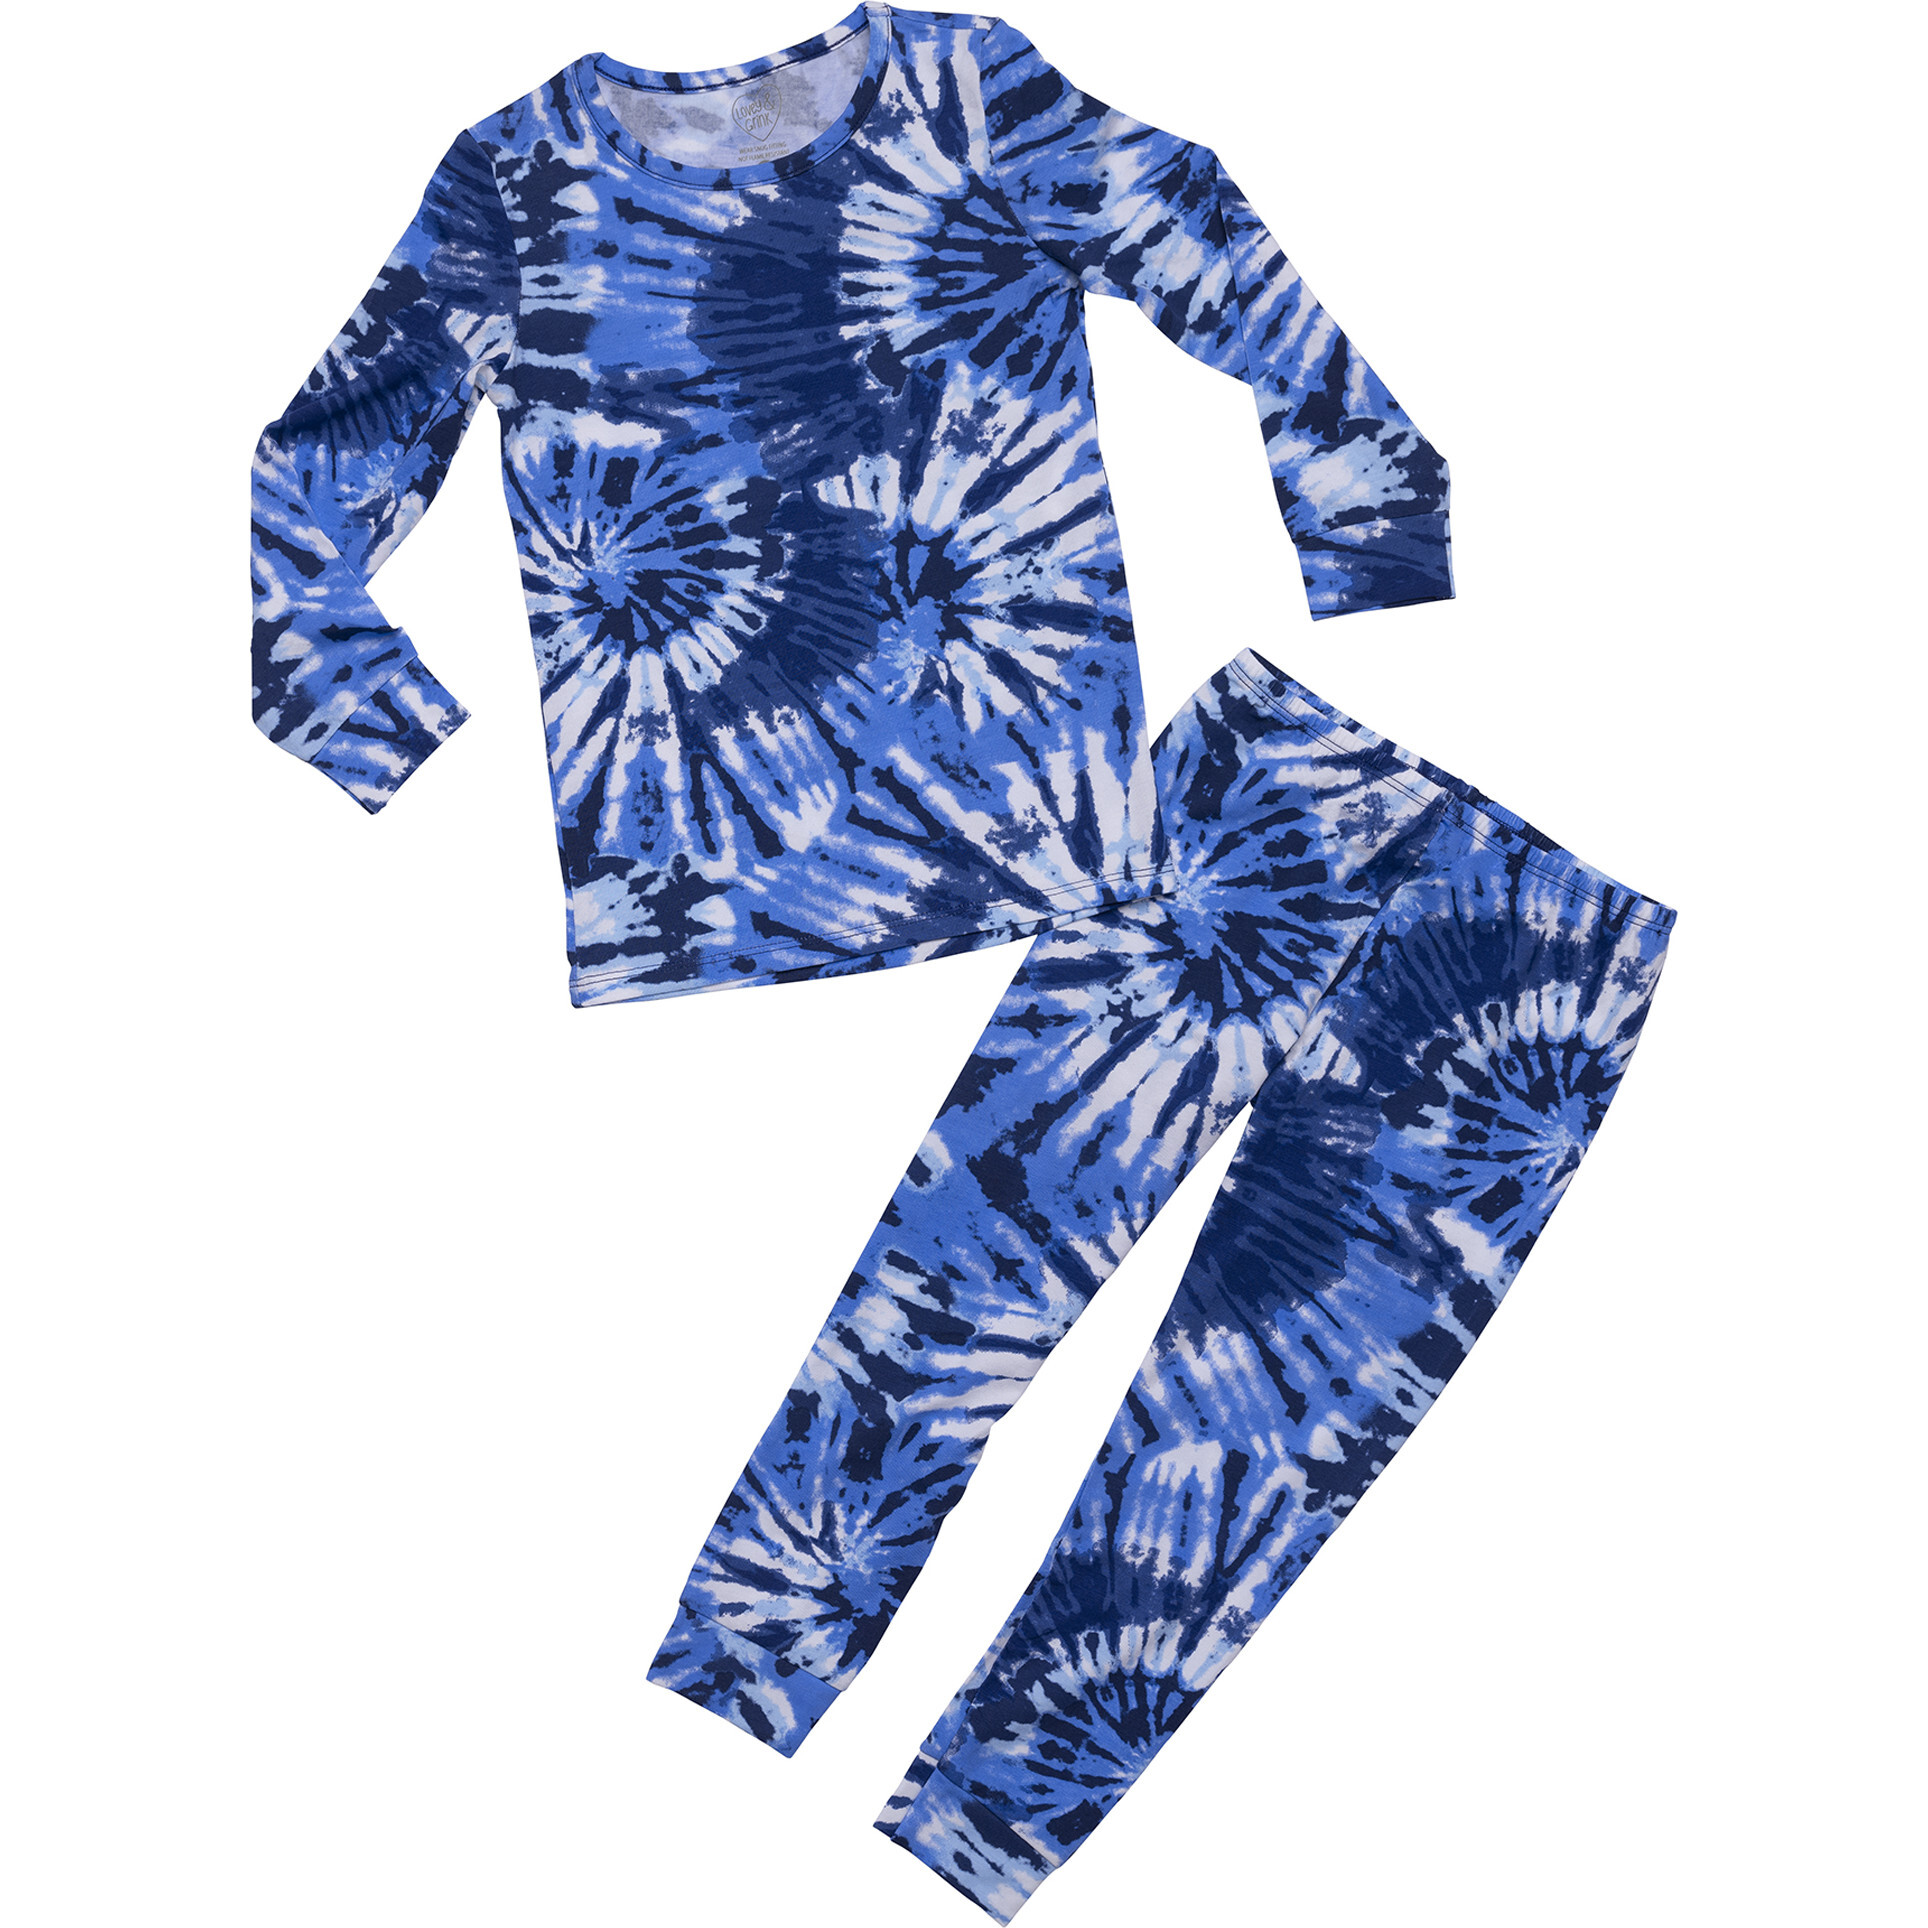 Kleding Unisex kinderkleding Pyjamas & Badjassen Pyjama Tie-Dye Pajamas Set Youth Size 5/6 Blue Splatter  Hand Dyed Toddler Snow-Dyed 